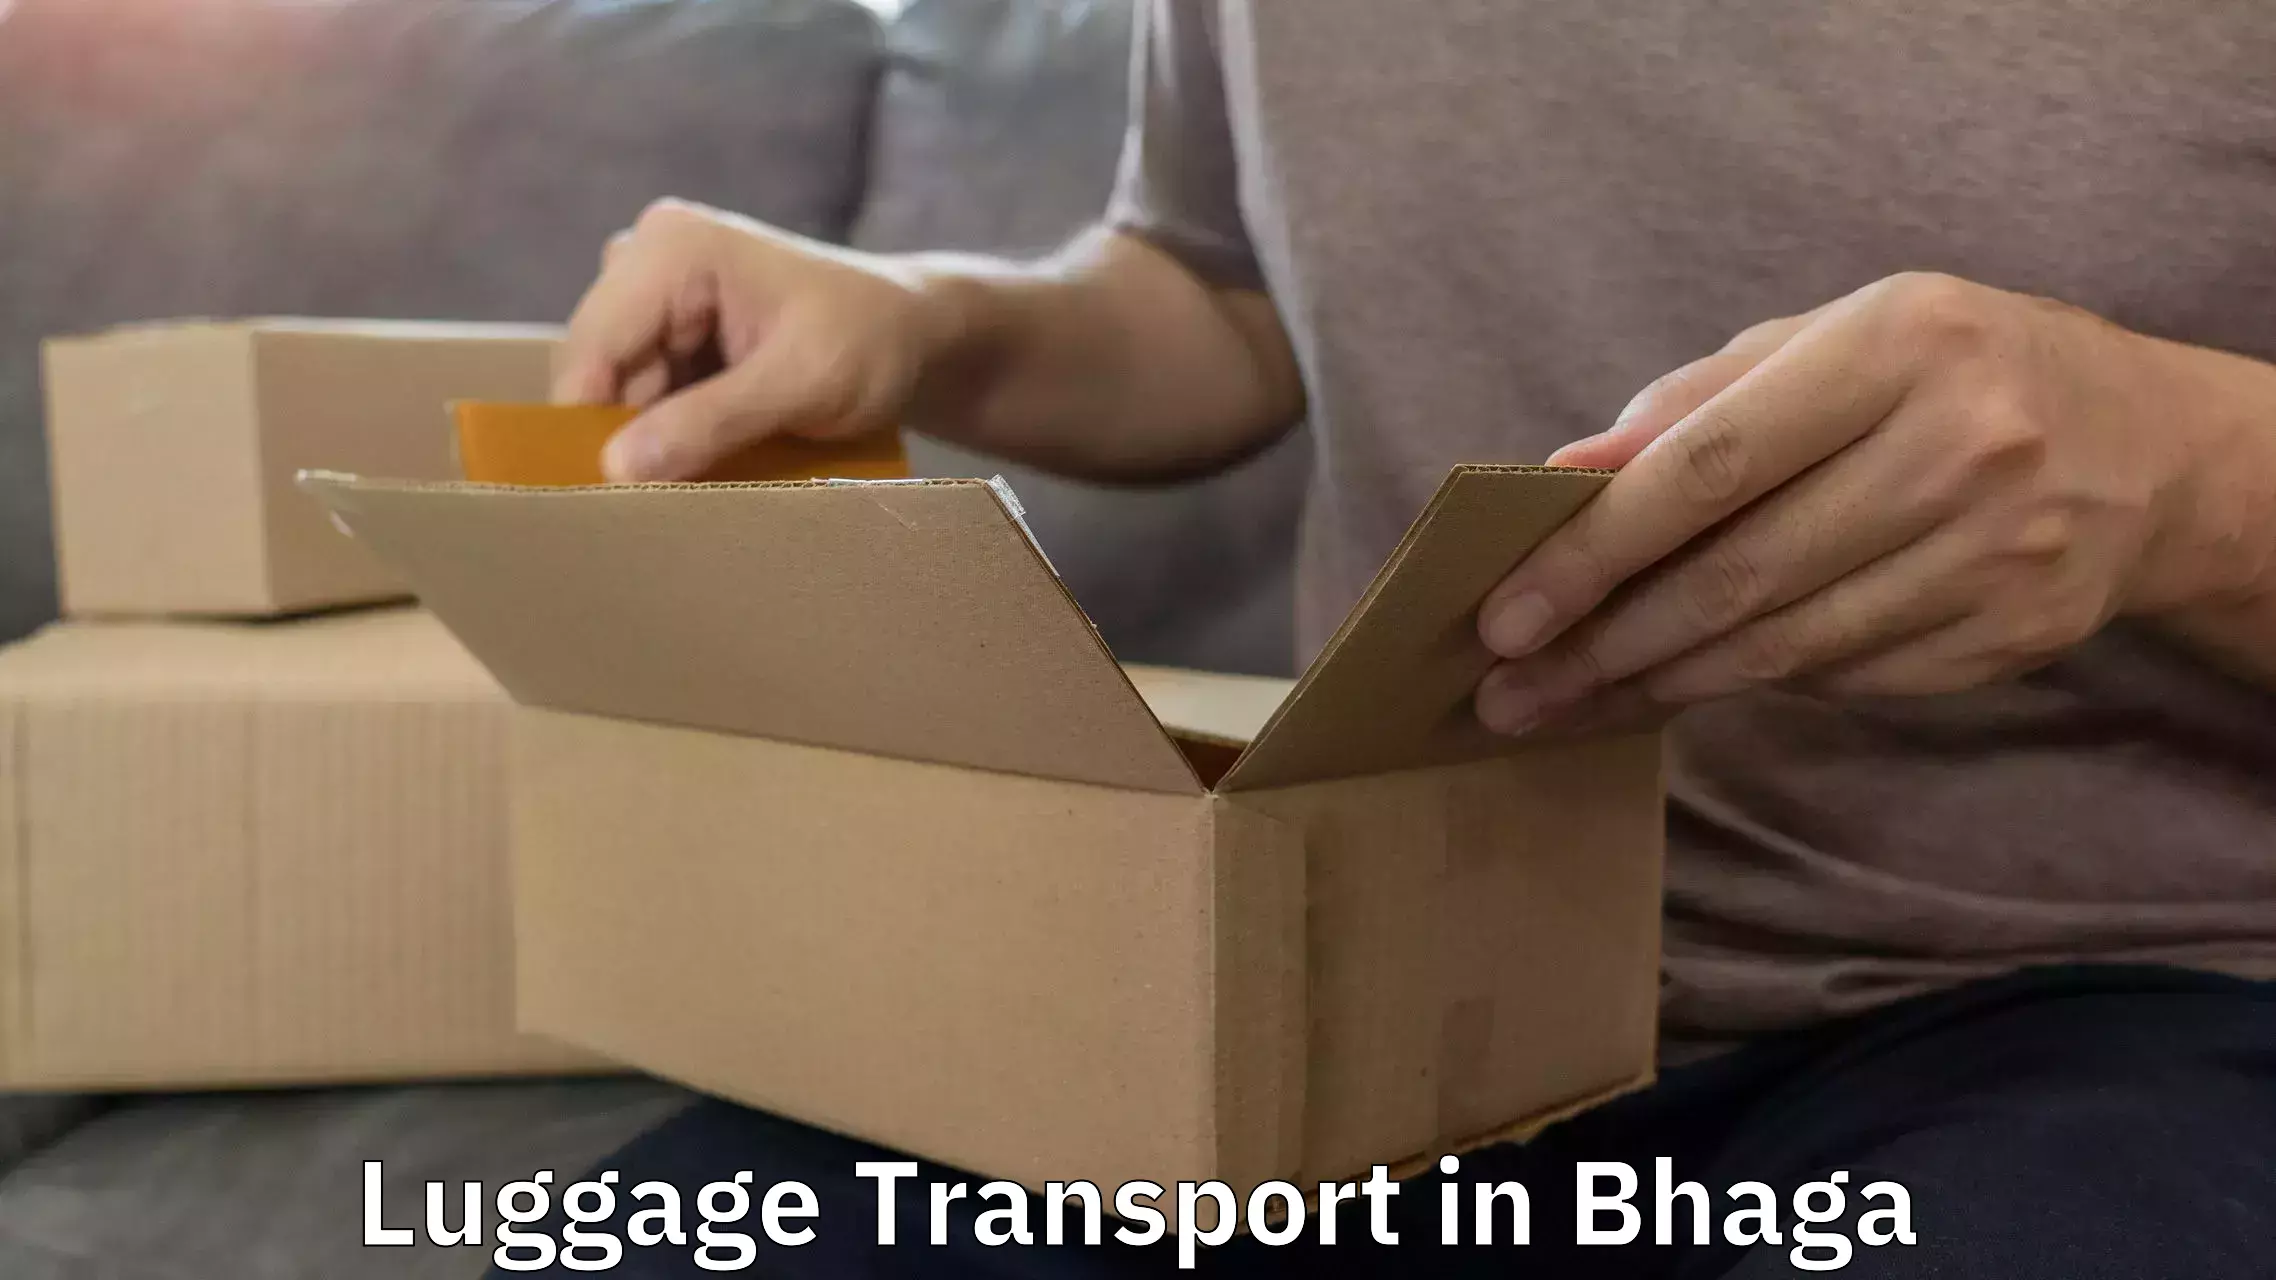 Luggage transfer service in Bhaga